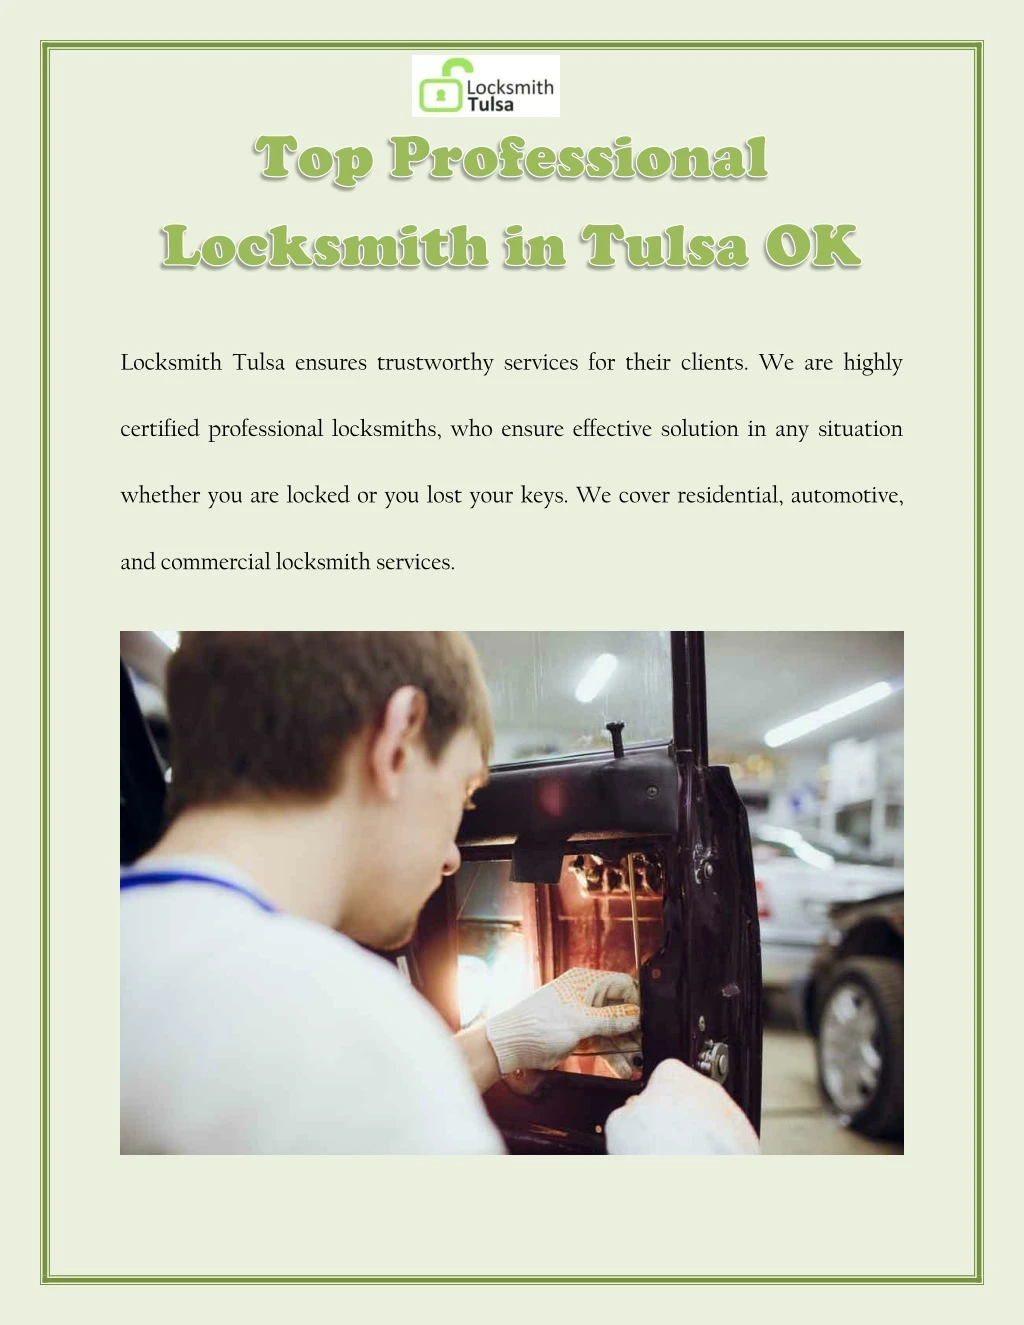 locksmith tulsa ensures trustworthy services